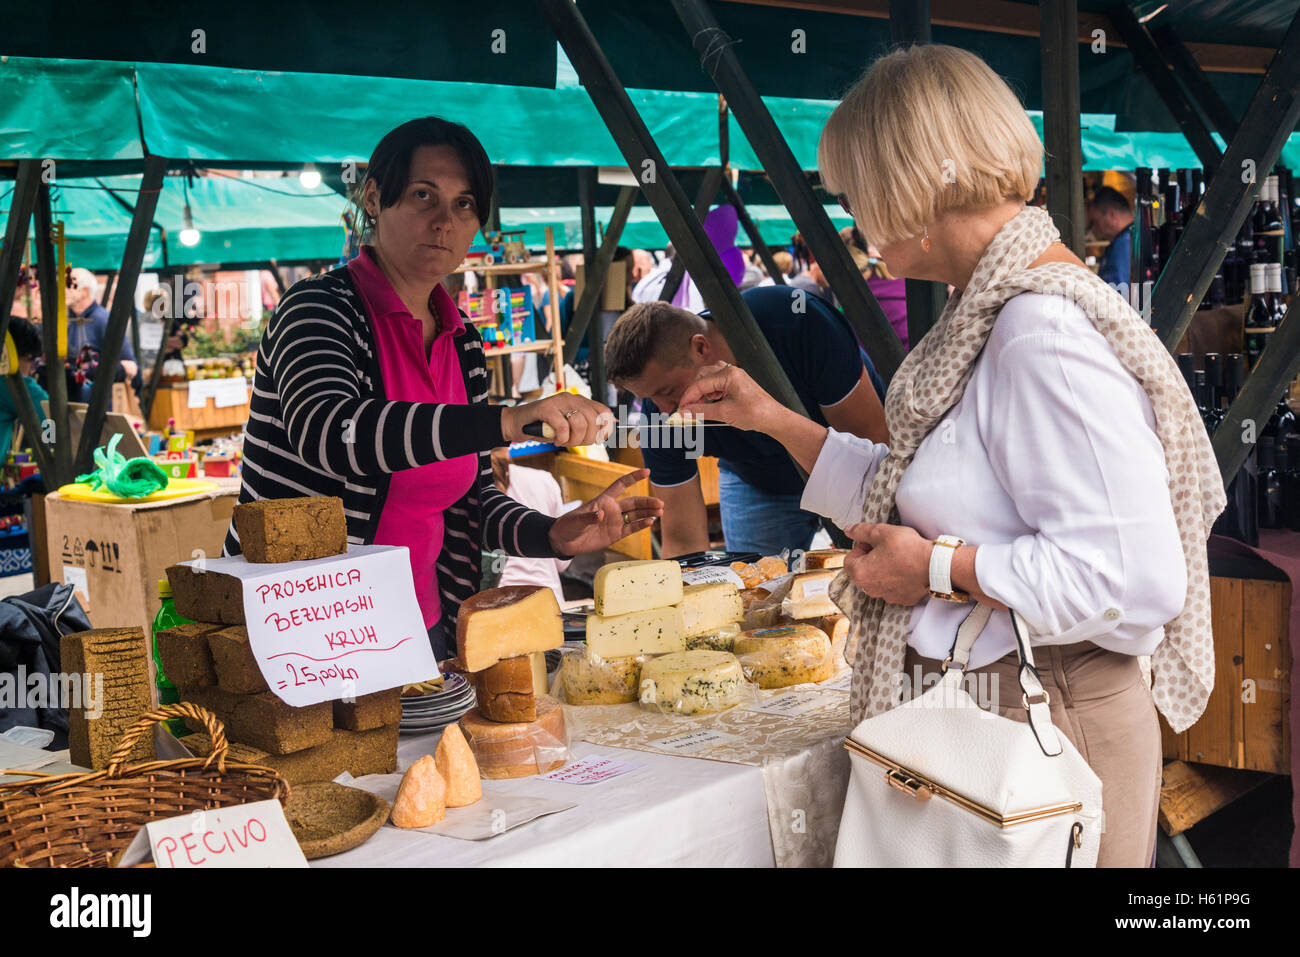 Cheese stall, Producers' artisan market, Ban Jelacic Square, Zagreb, Croatia Stock Photo